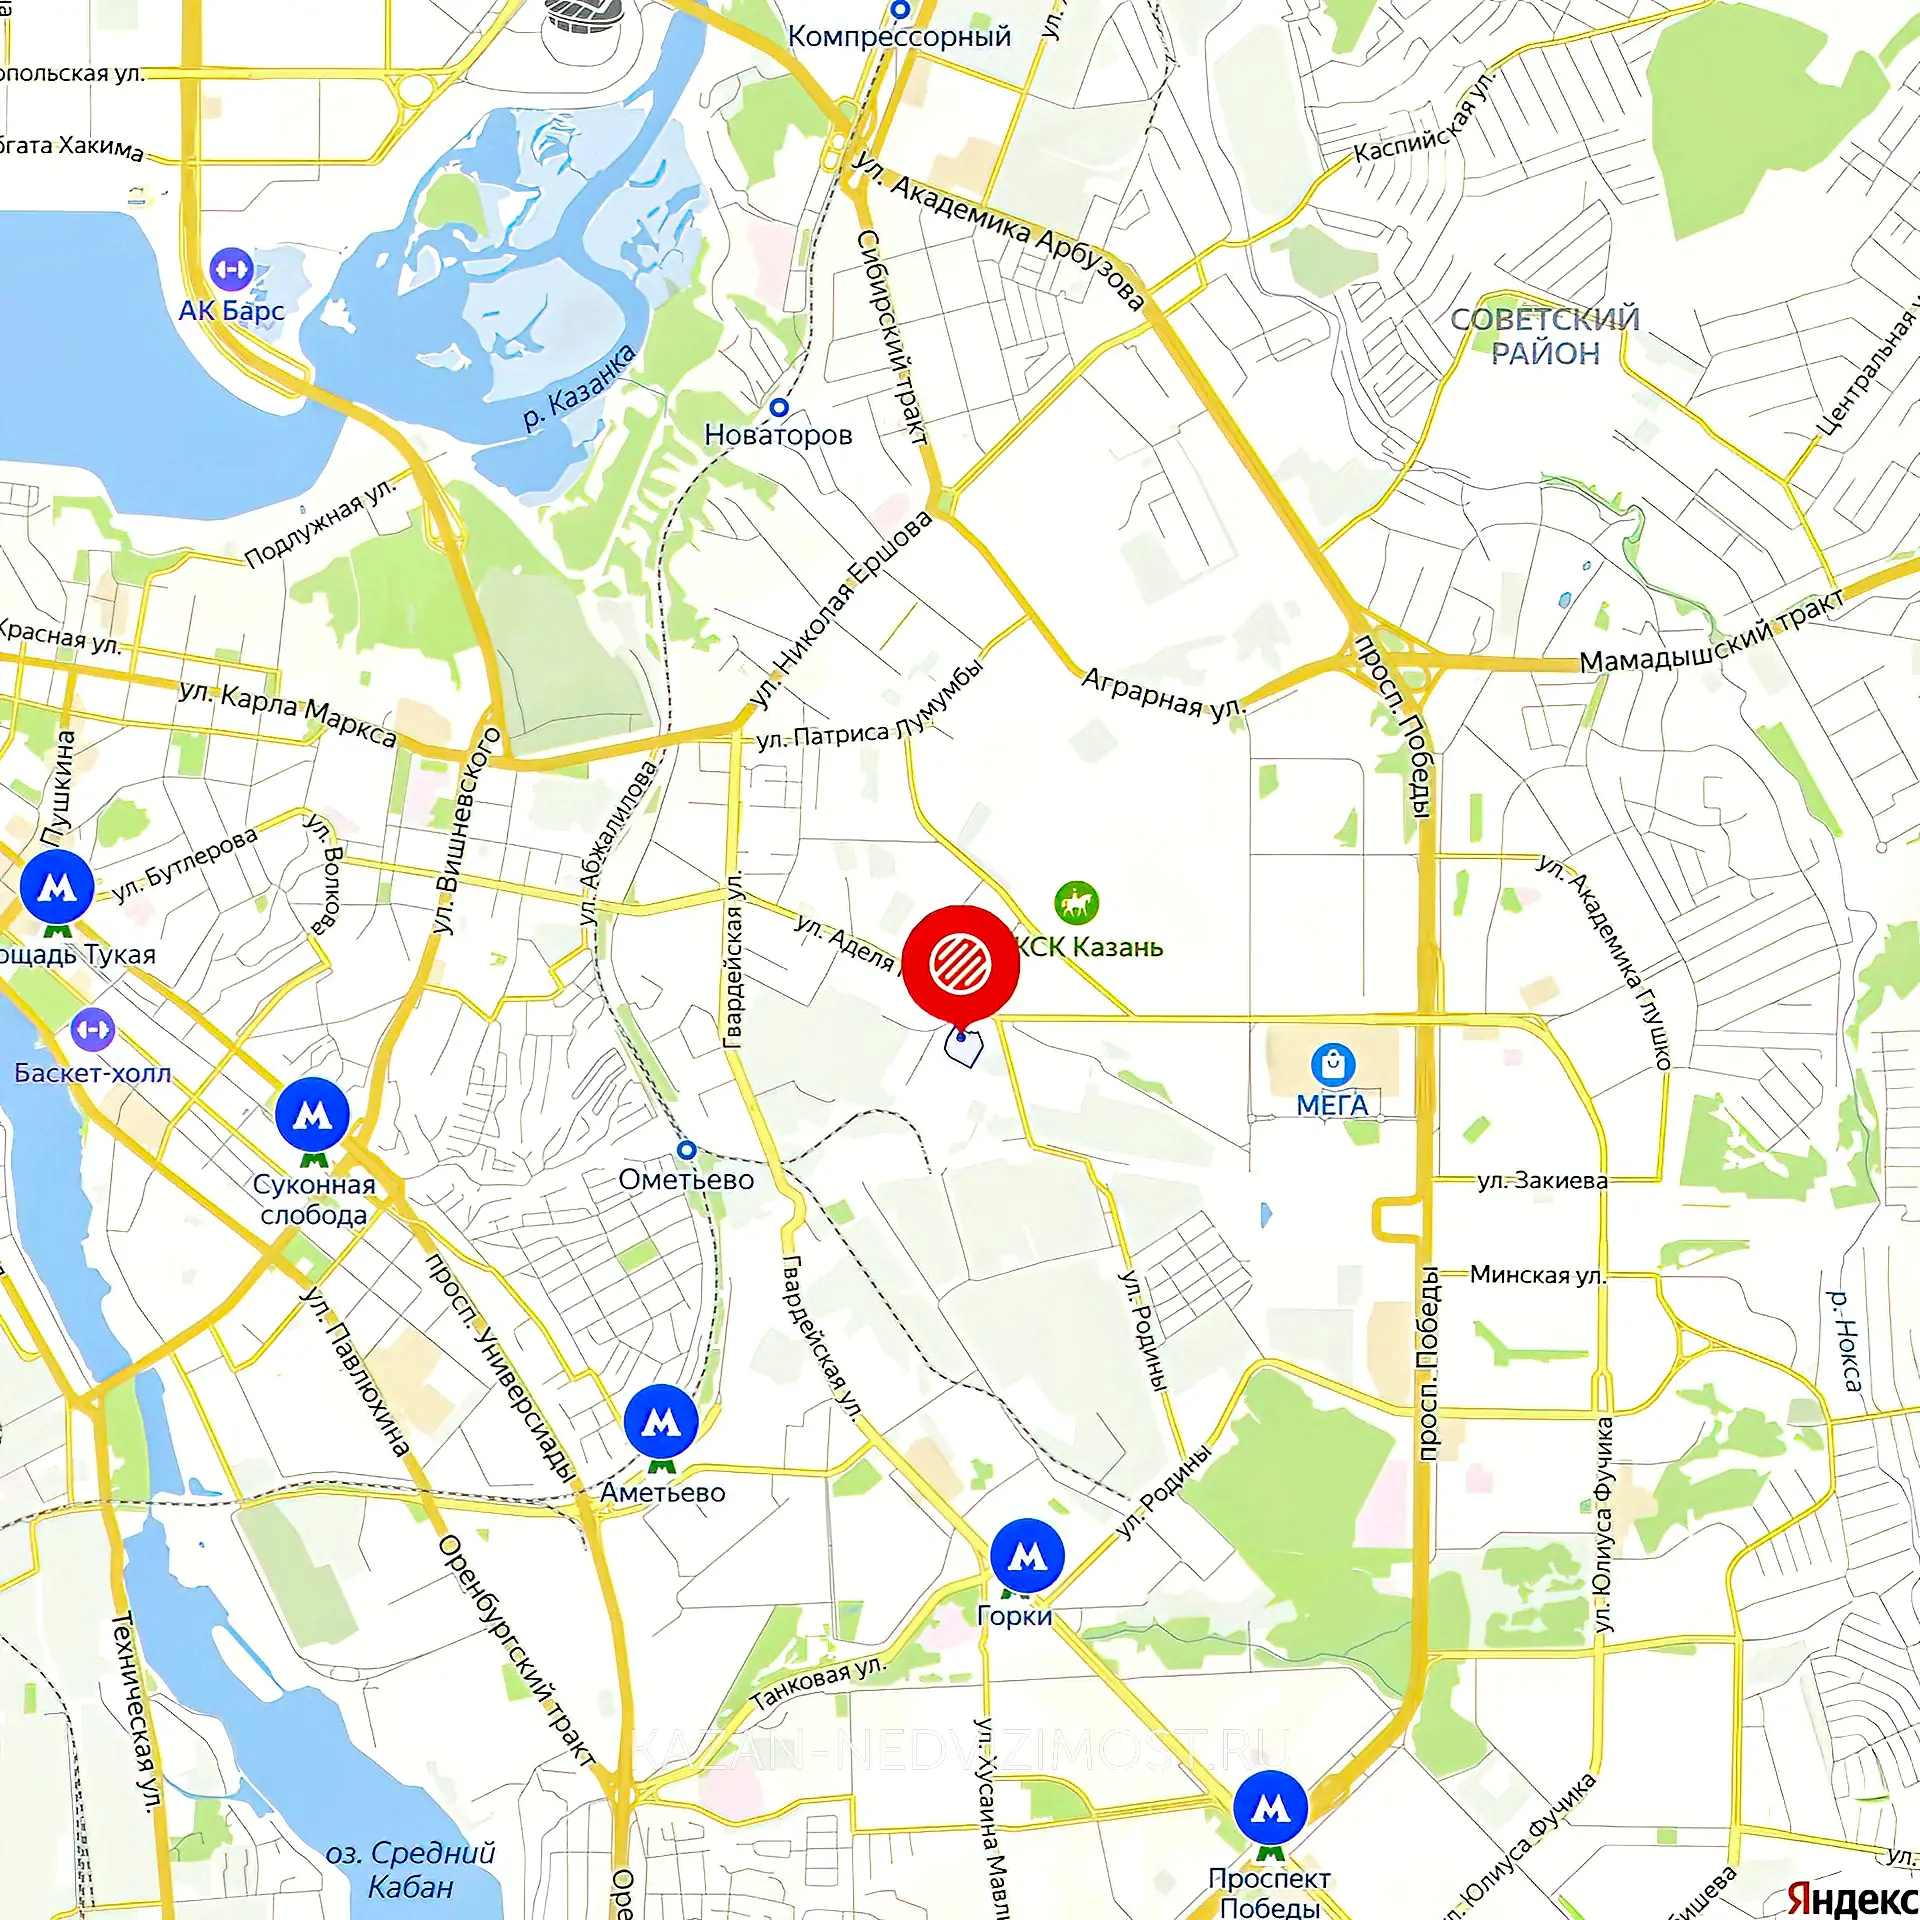 Расположение и маршрут на карте от ЖК Открытие до центра города